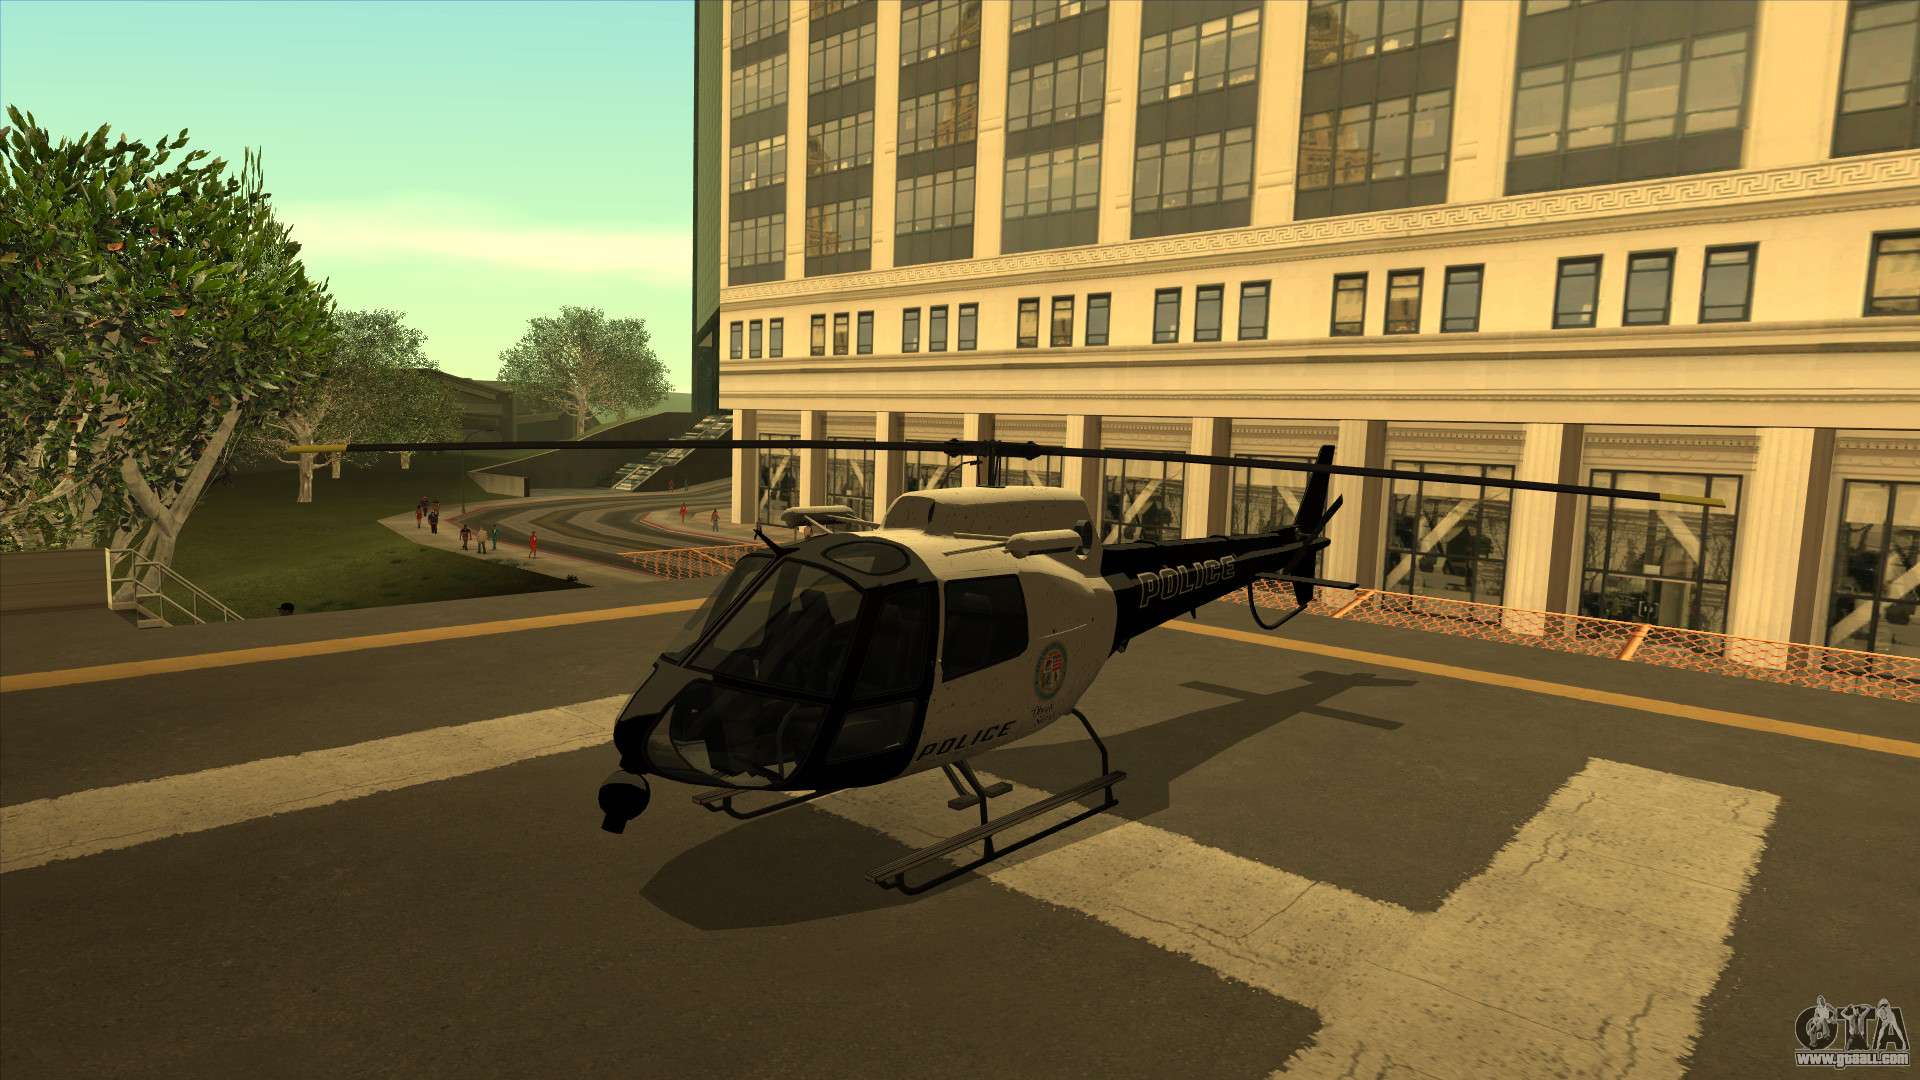 GTA SA - Helicopters and Planes Cheats, GTA SAN ANDREAS